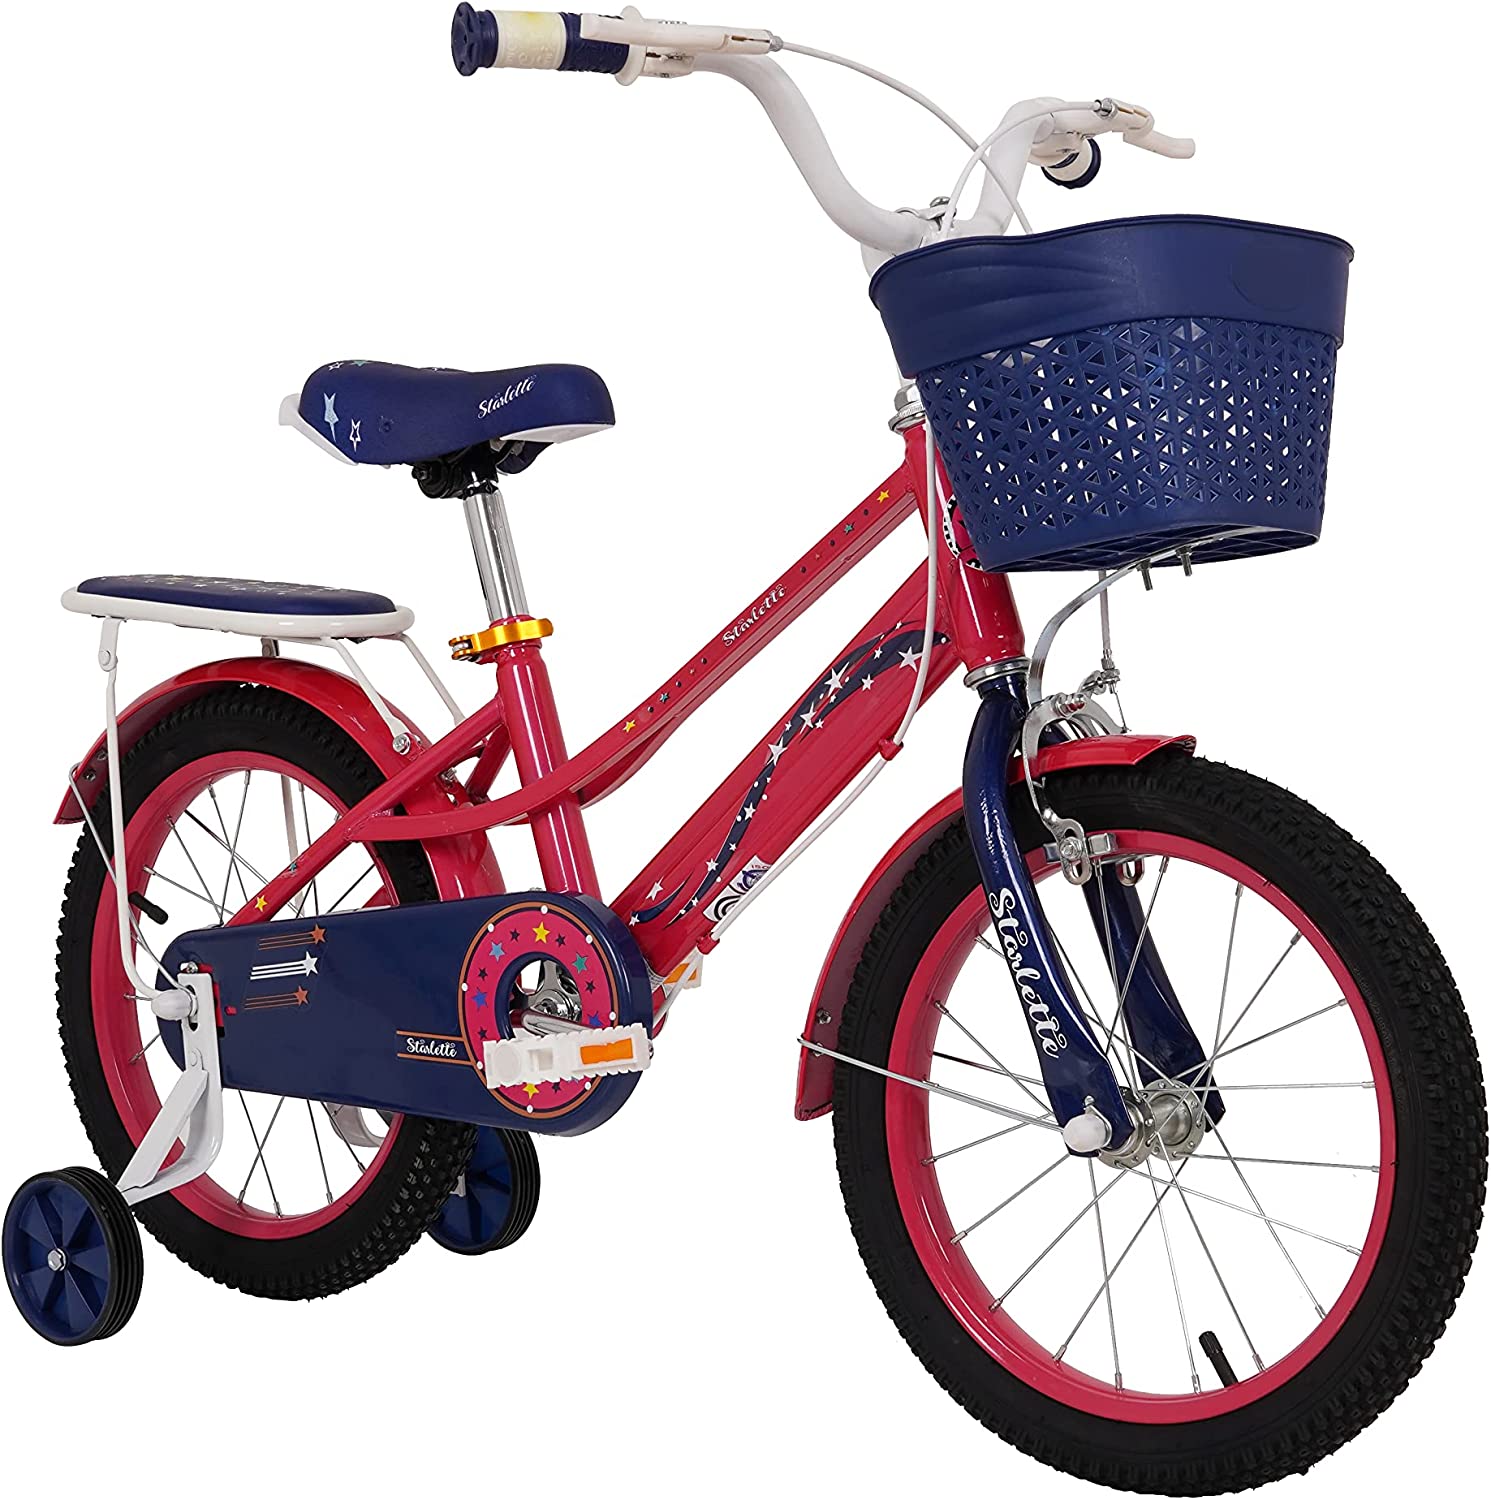 Vego Starlette Kids Road Bike With Basket 16 Inch, Pink